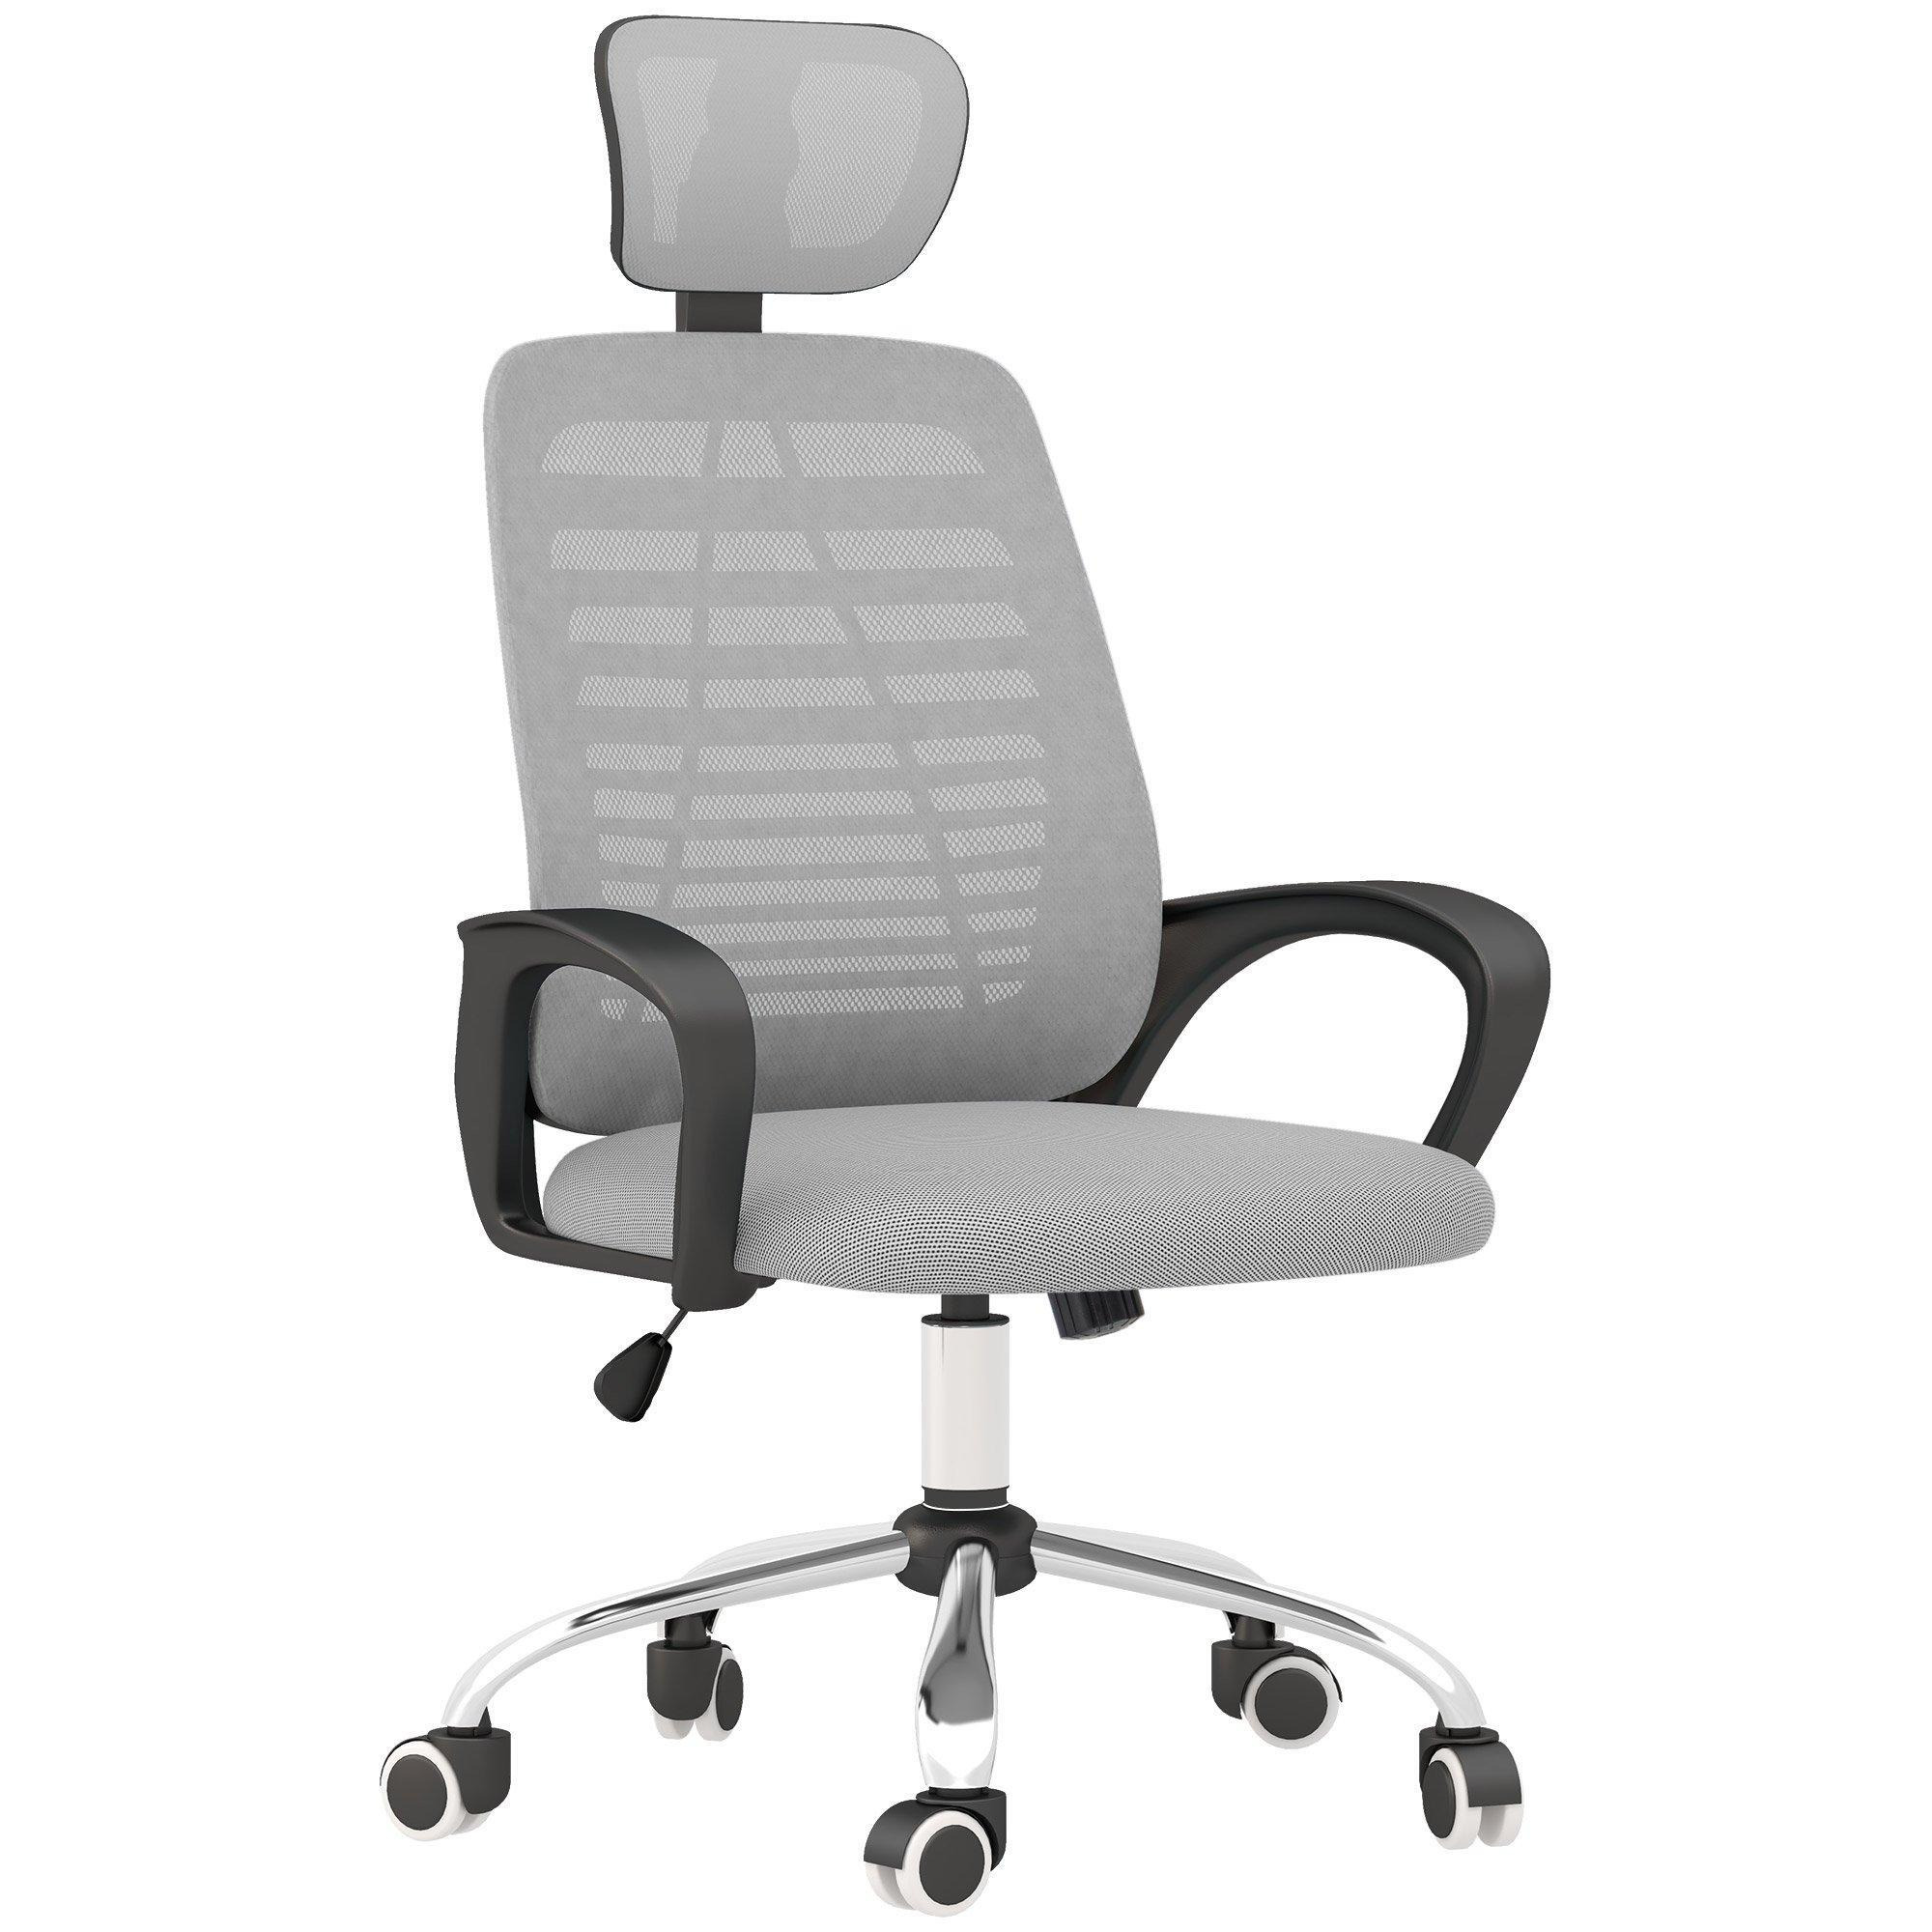 Ergonomic Mesh Office Chair with Adjustable Headrest - image 1